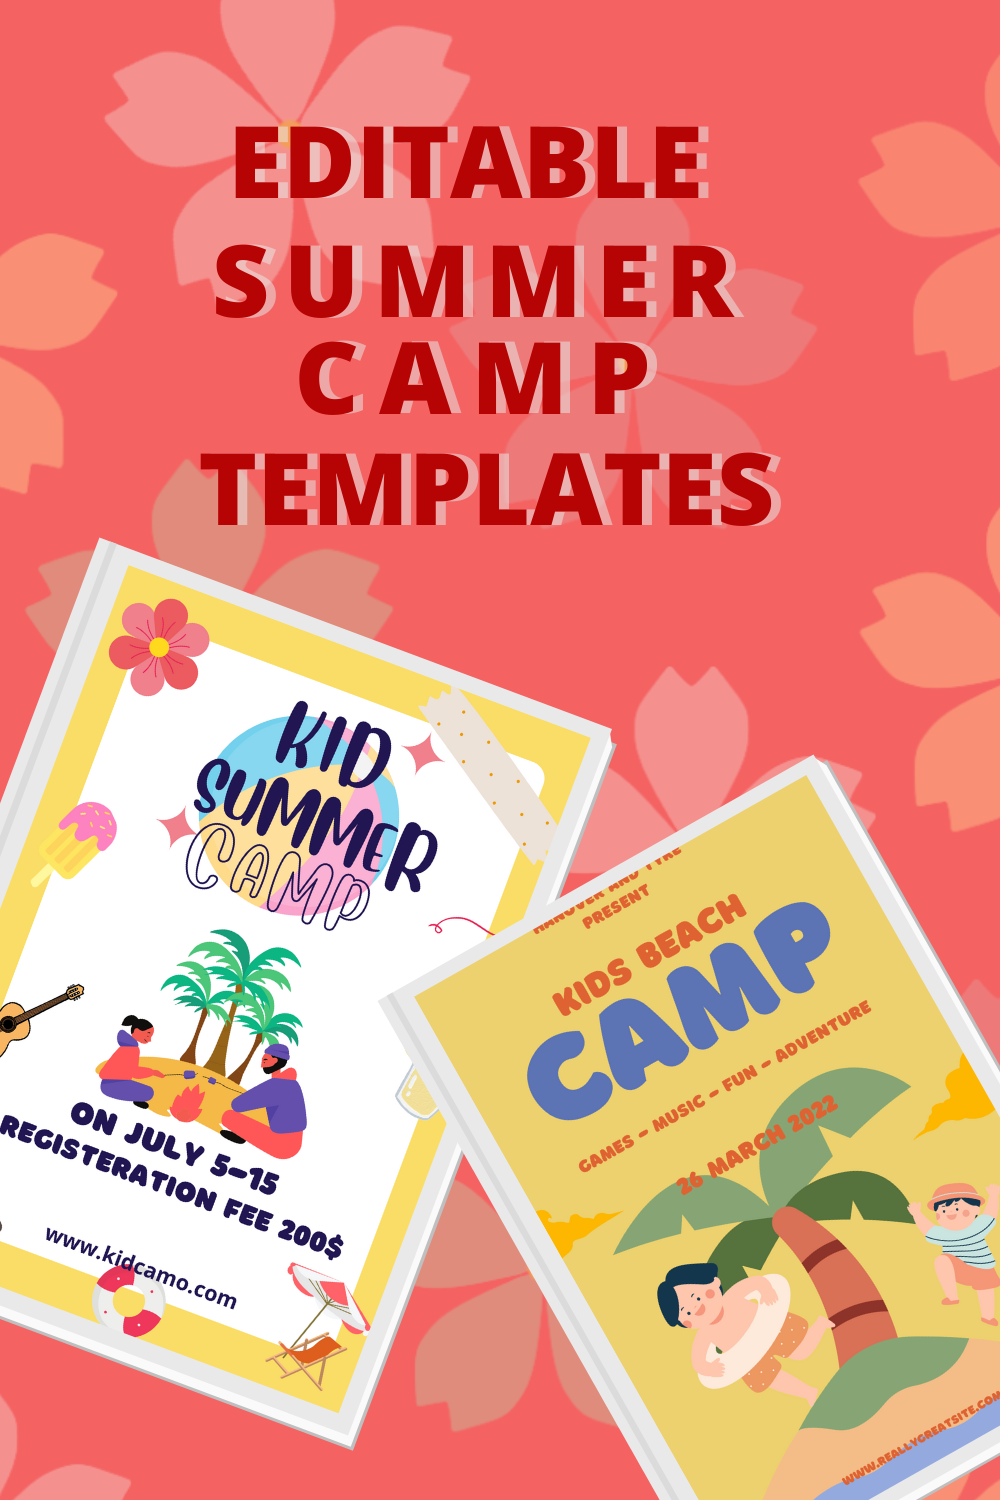 10 Editable Instagram Summer Camp Templates Pinterest Image.